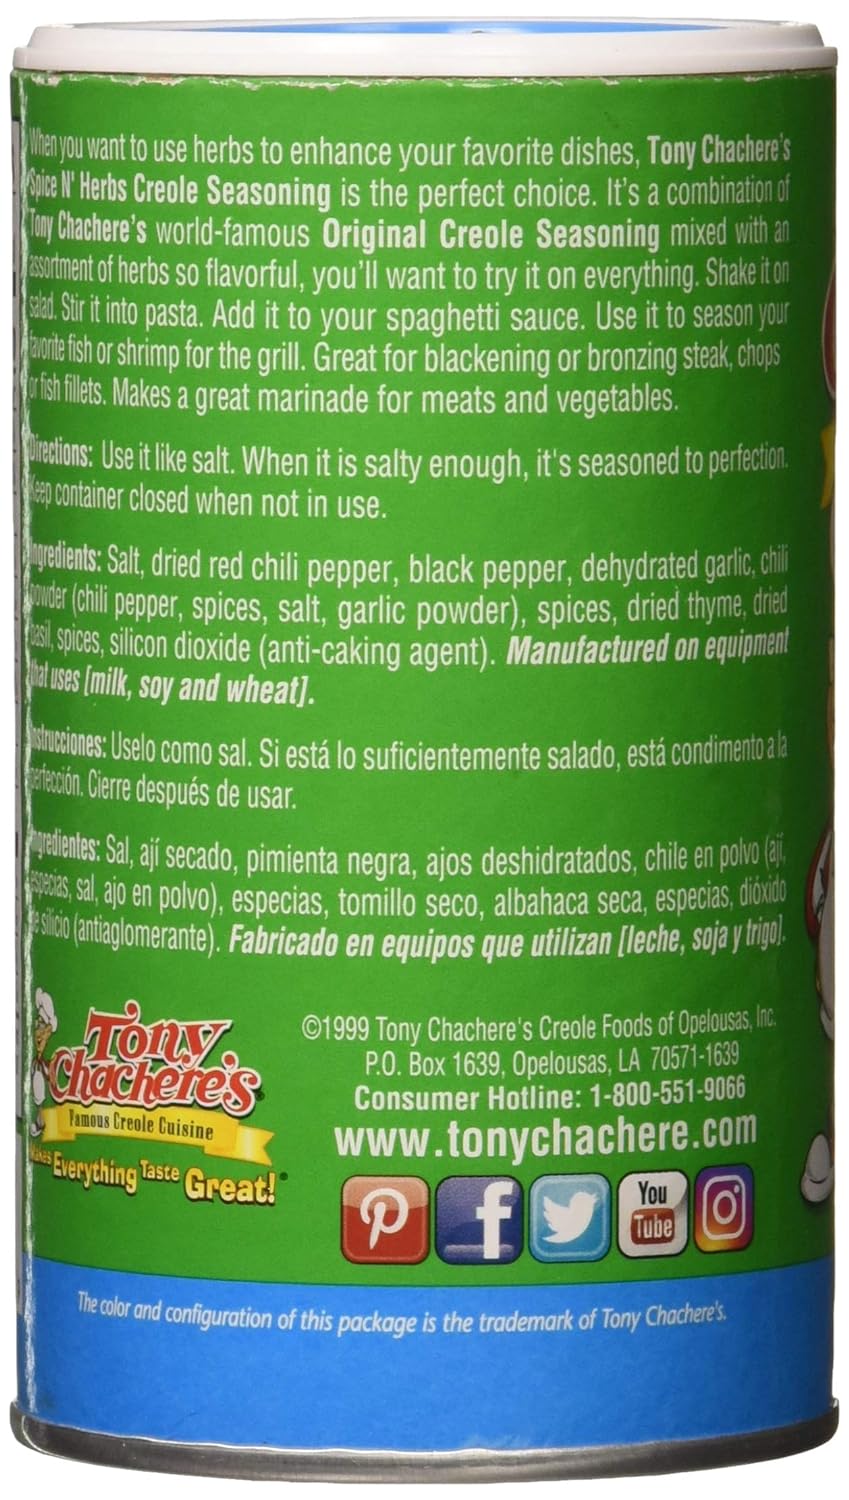  Tony Chacheres Special Herbal Blend Spice N Herb Seasoning - 5 oz